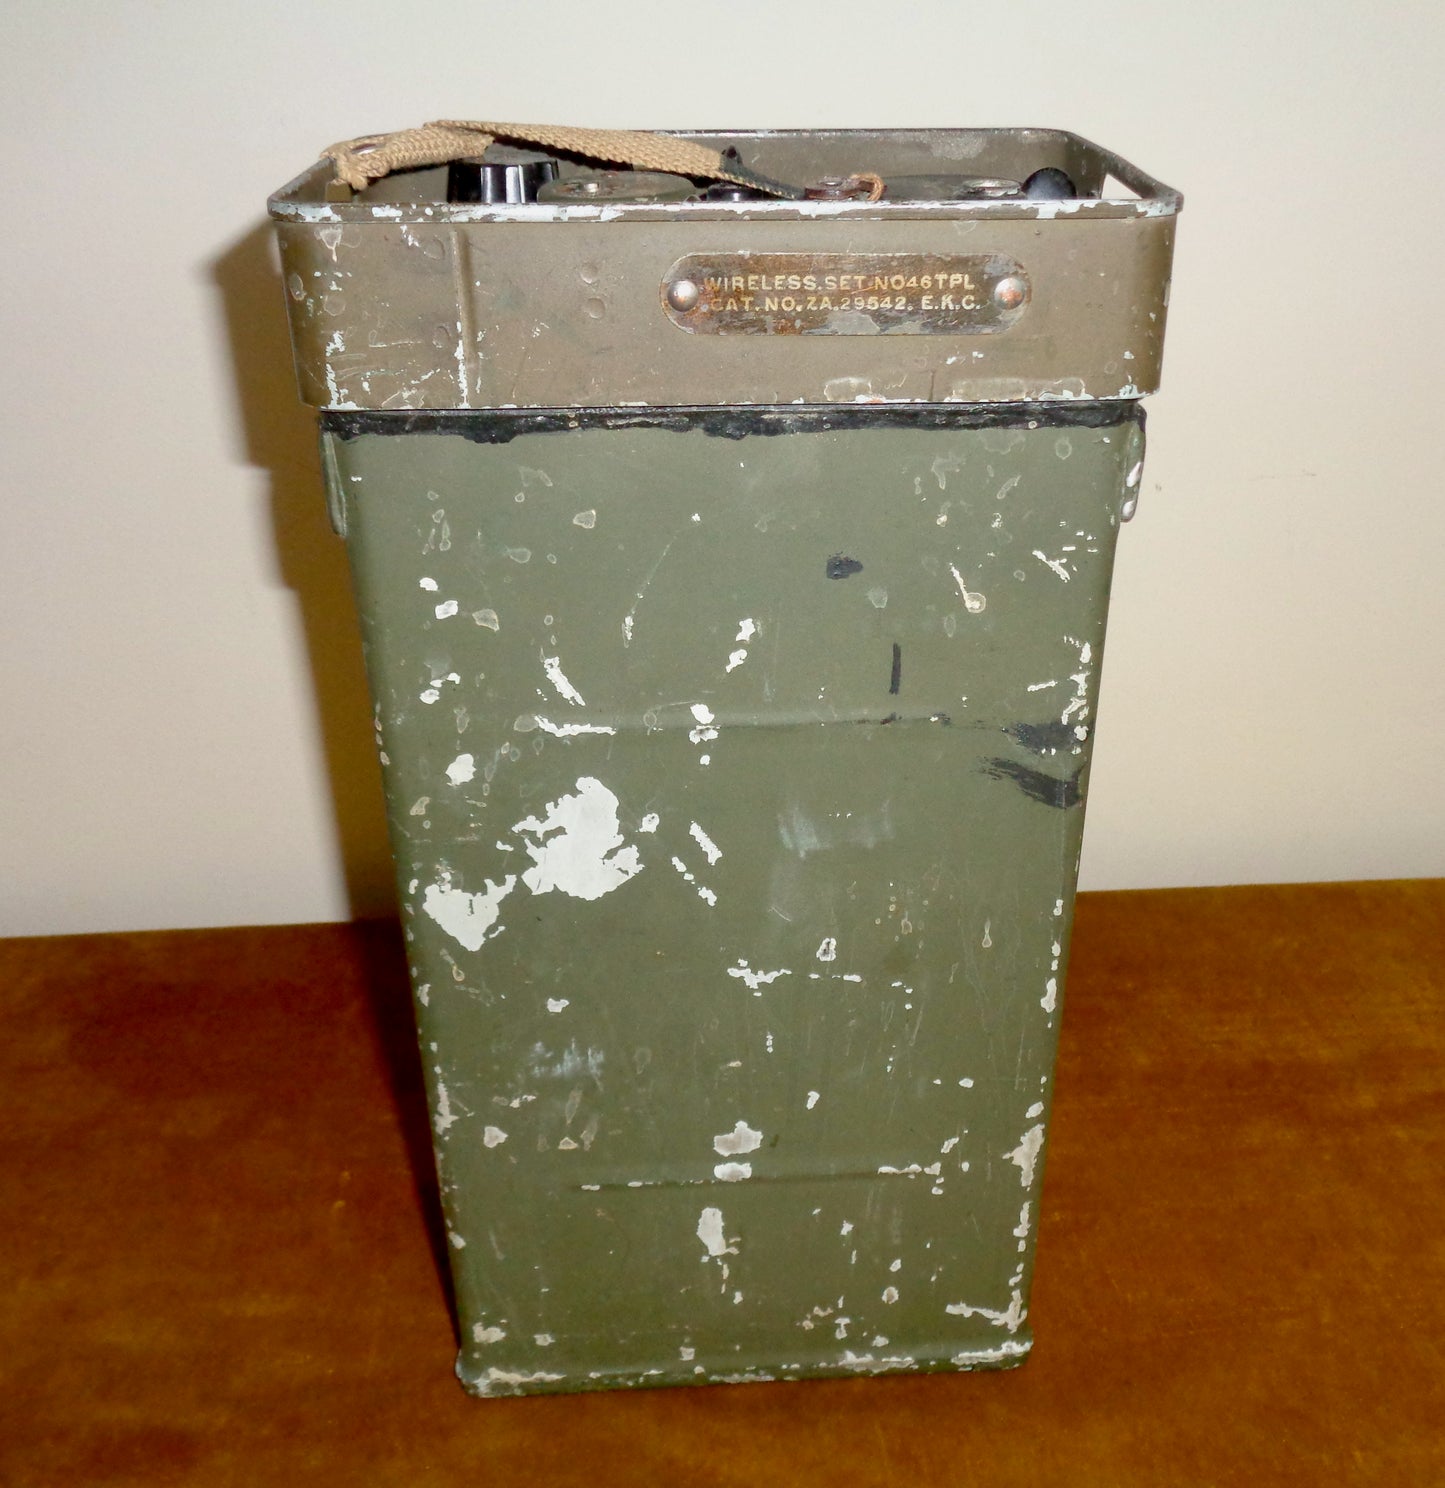 WW2 WS46 Military Man Pack Radio Transceiver ZA 29542 EKC